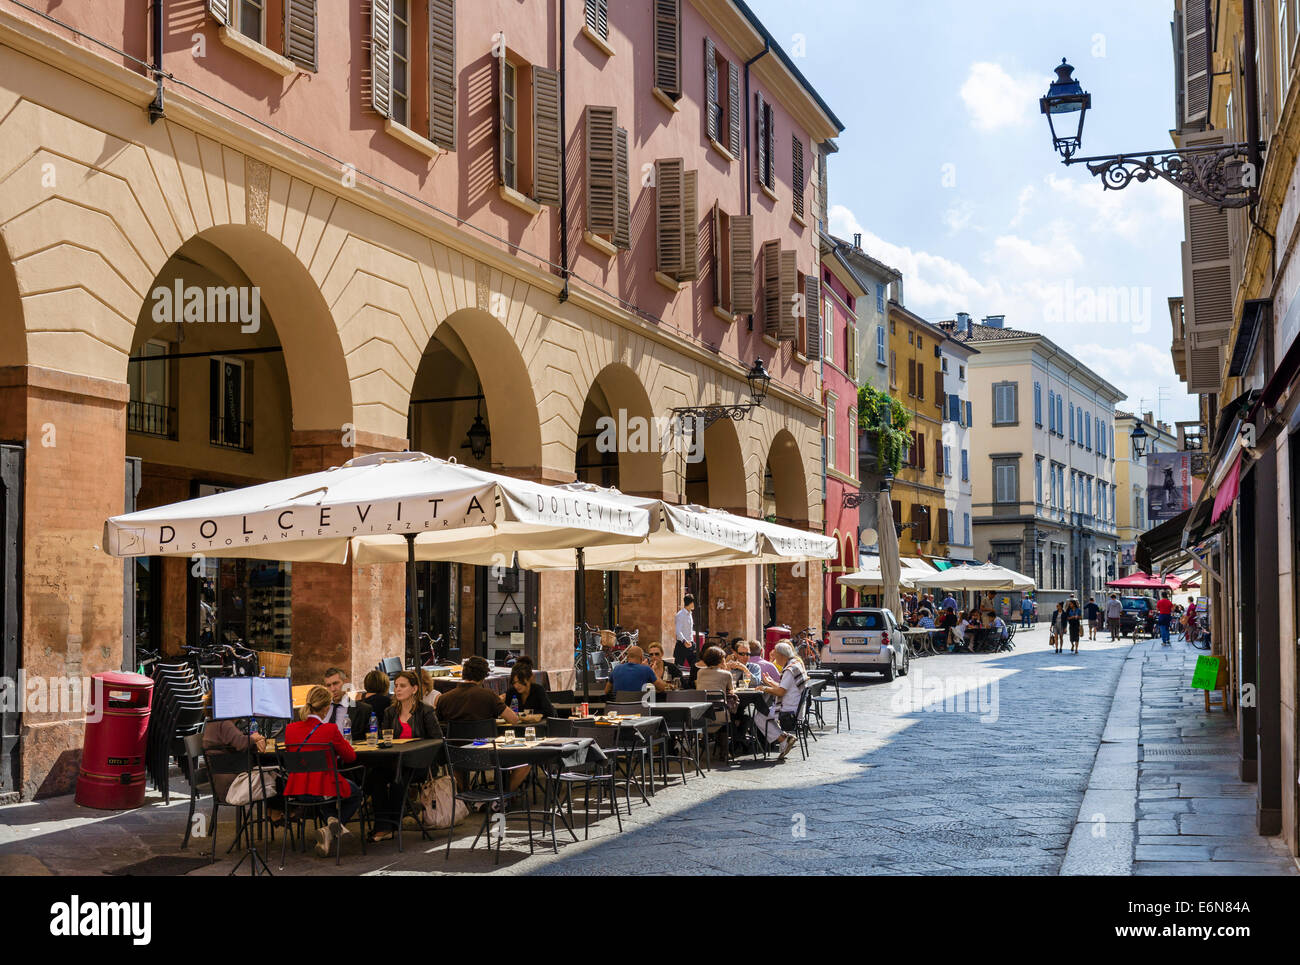 Dolcevita restaurant on Strada Farini in the historic city centre, Parma, Emilia Romagna, Italy Stock Photo